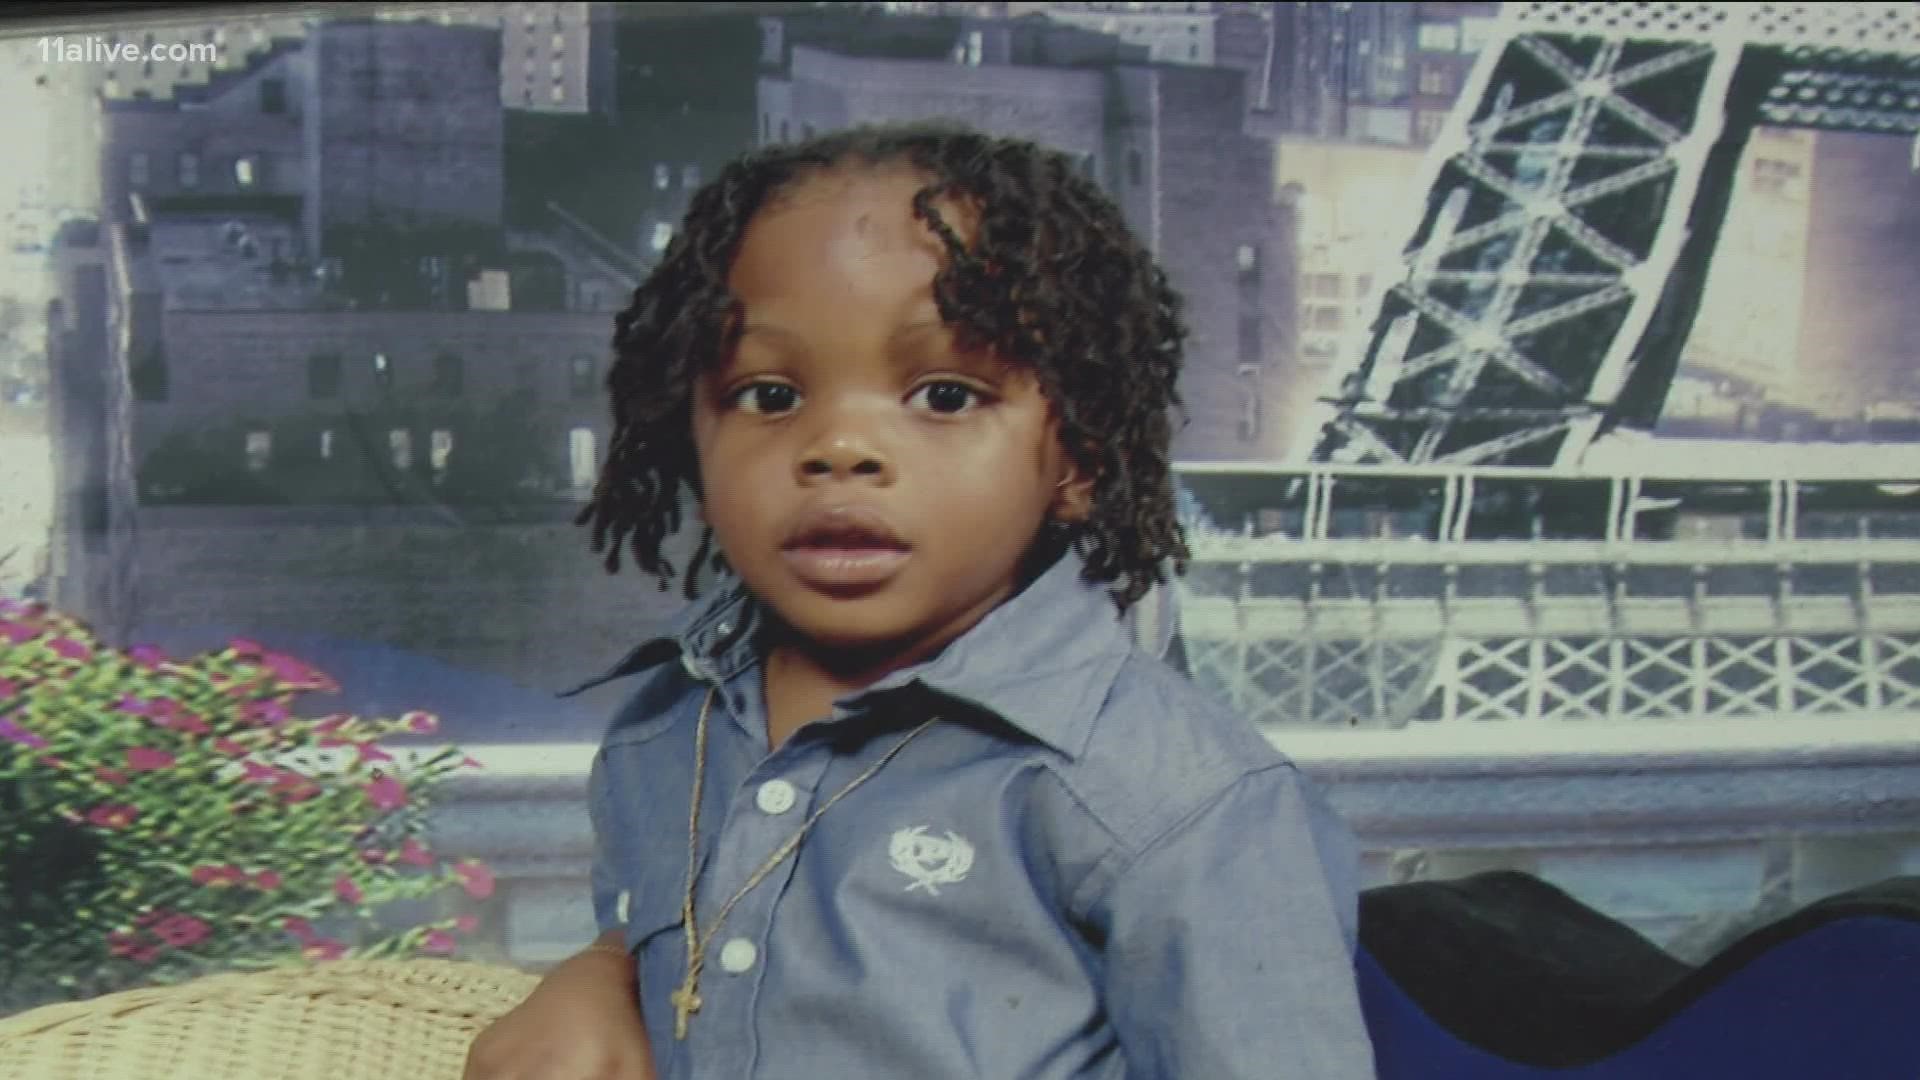 Family members have identified the 8-year-old boy as Kayden Jones.